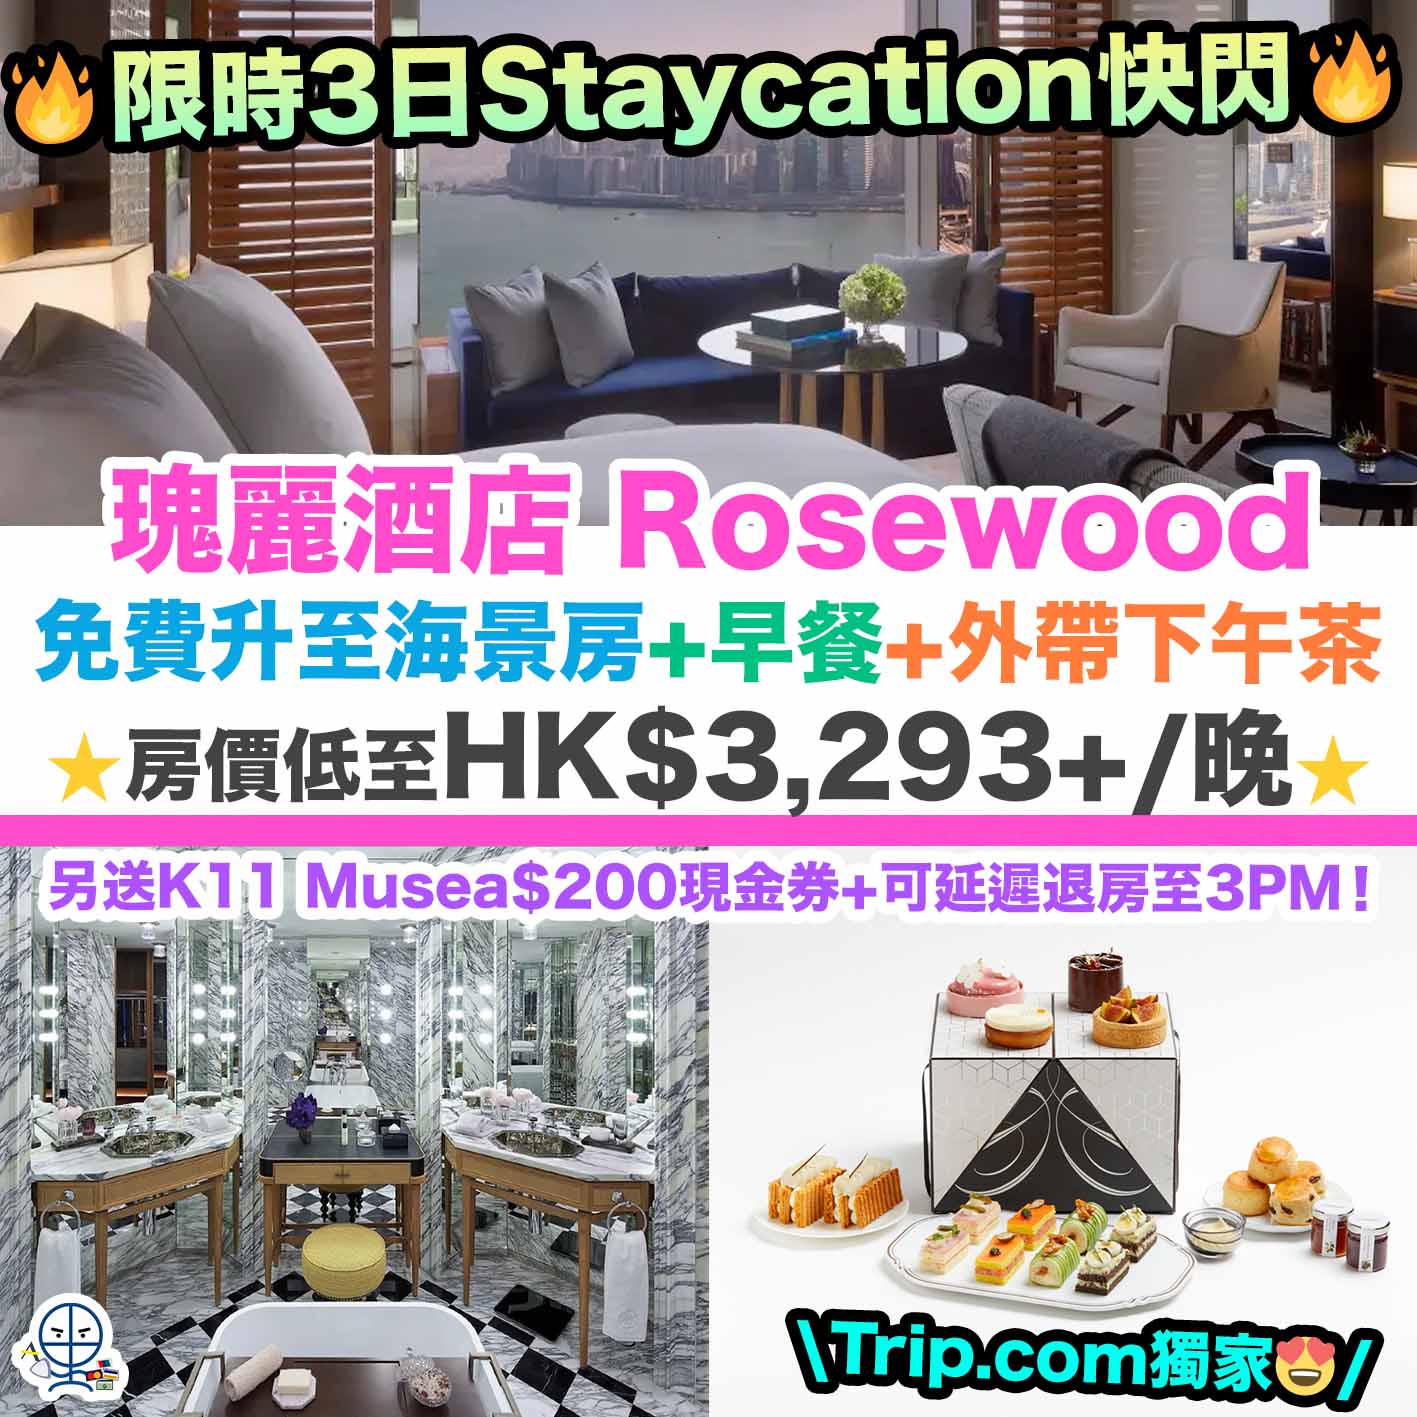 瑰麗酒店Rosewood優惠-住宿報告-Hong Kong Hotel staycation-香港酒店住宿優惠-infinity pool